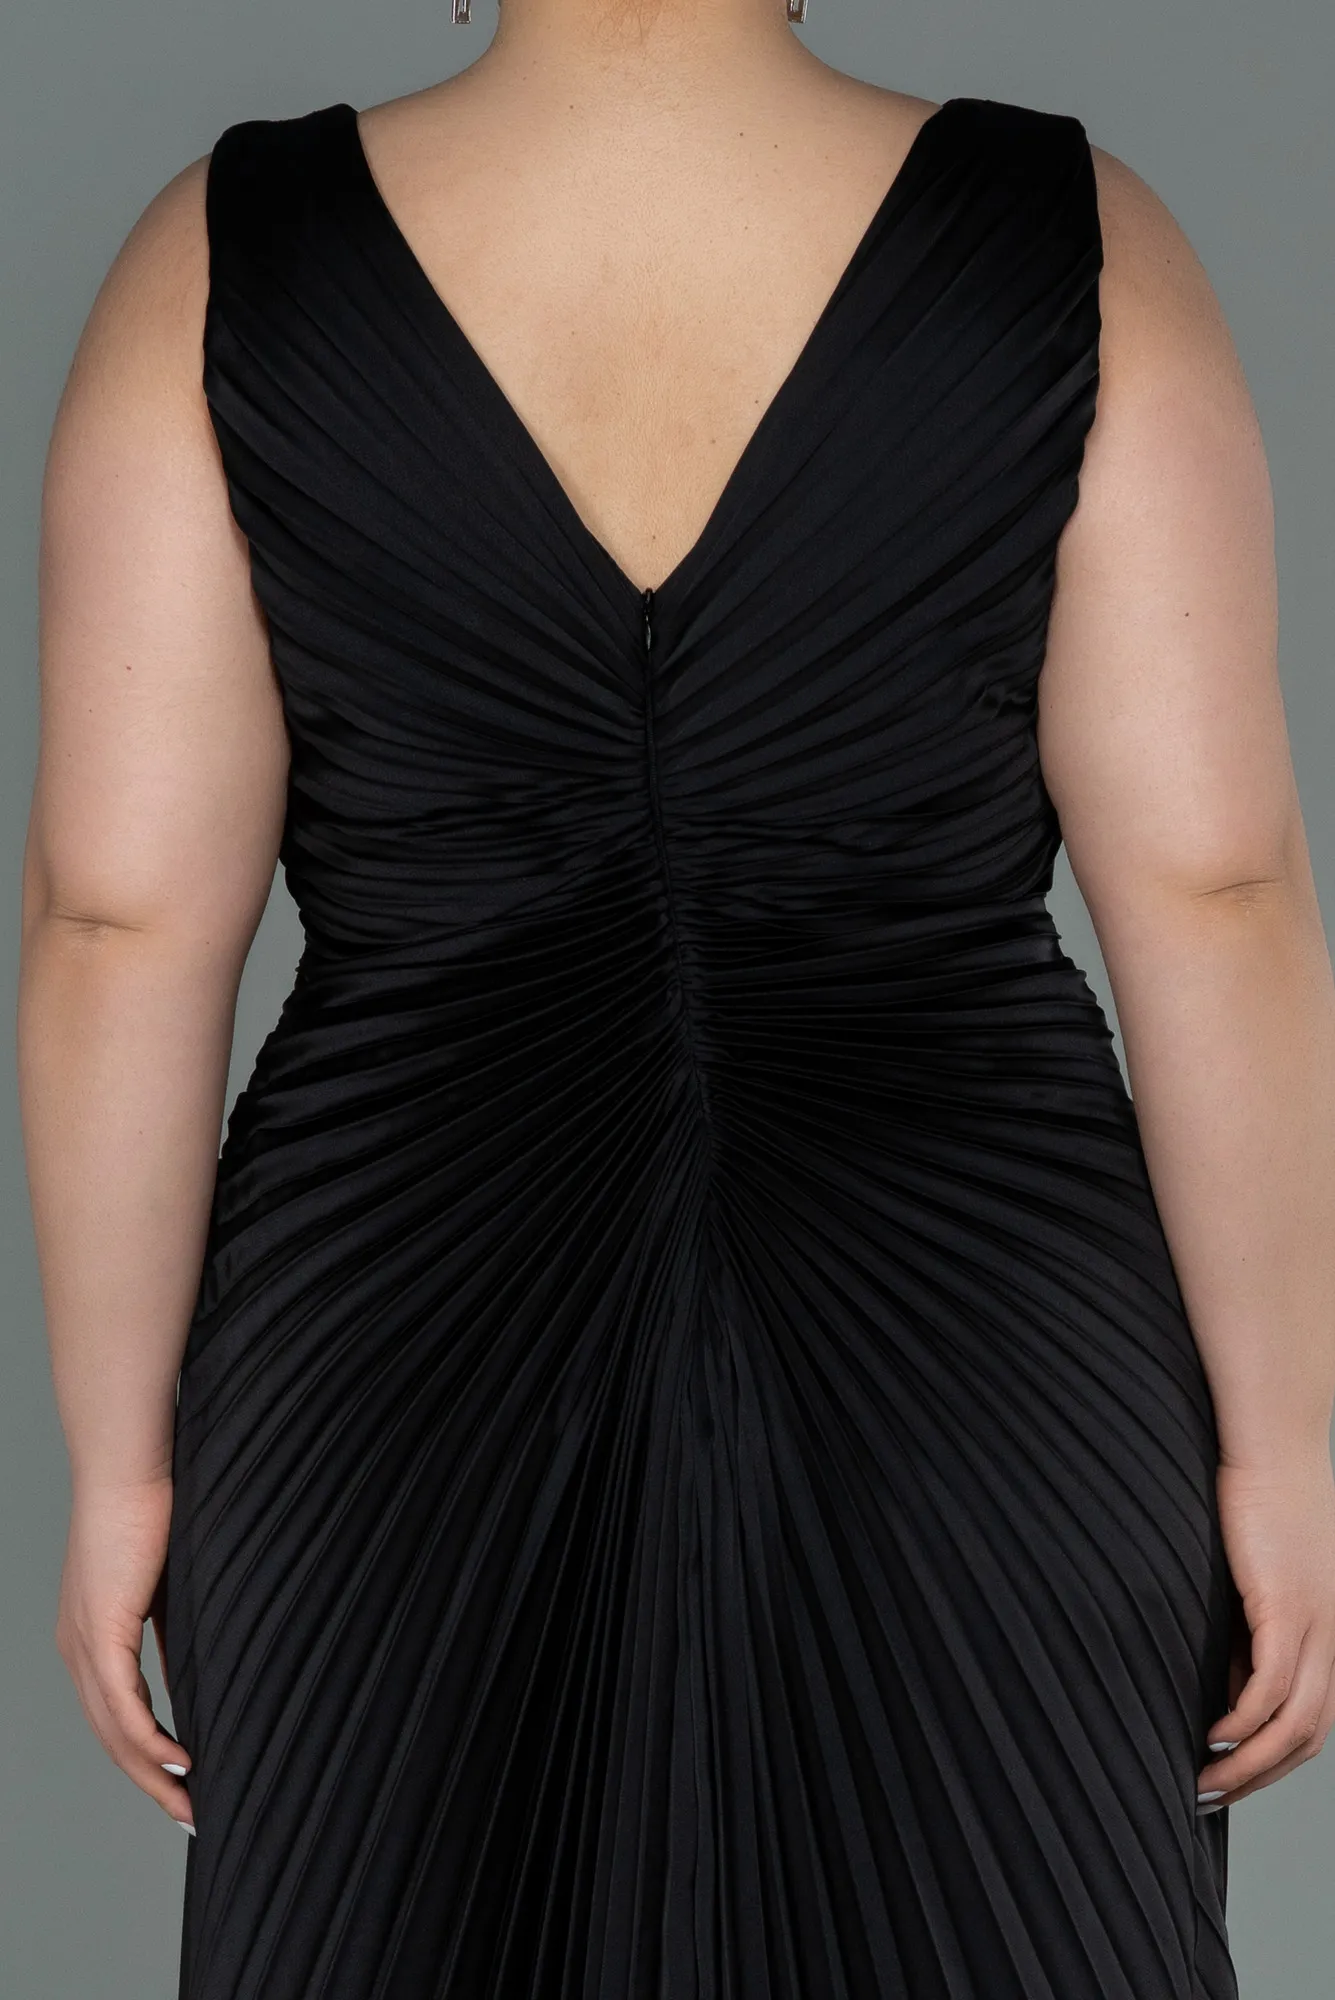 Black-Long Satin Plus Size Evening Dress ABU3076